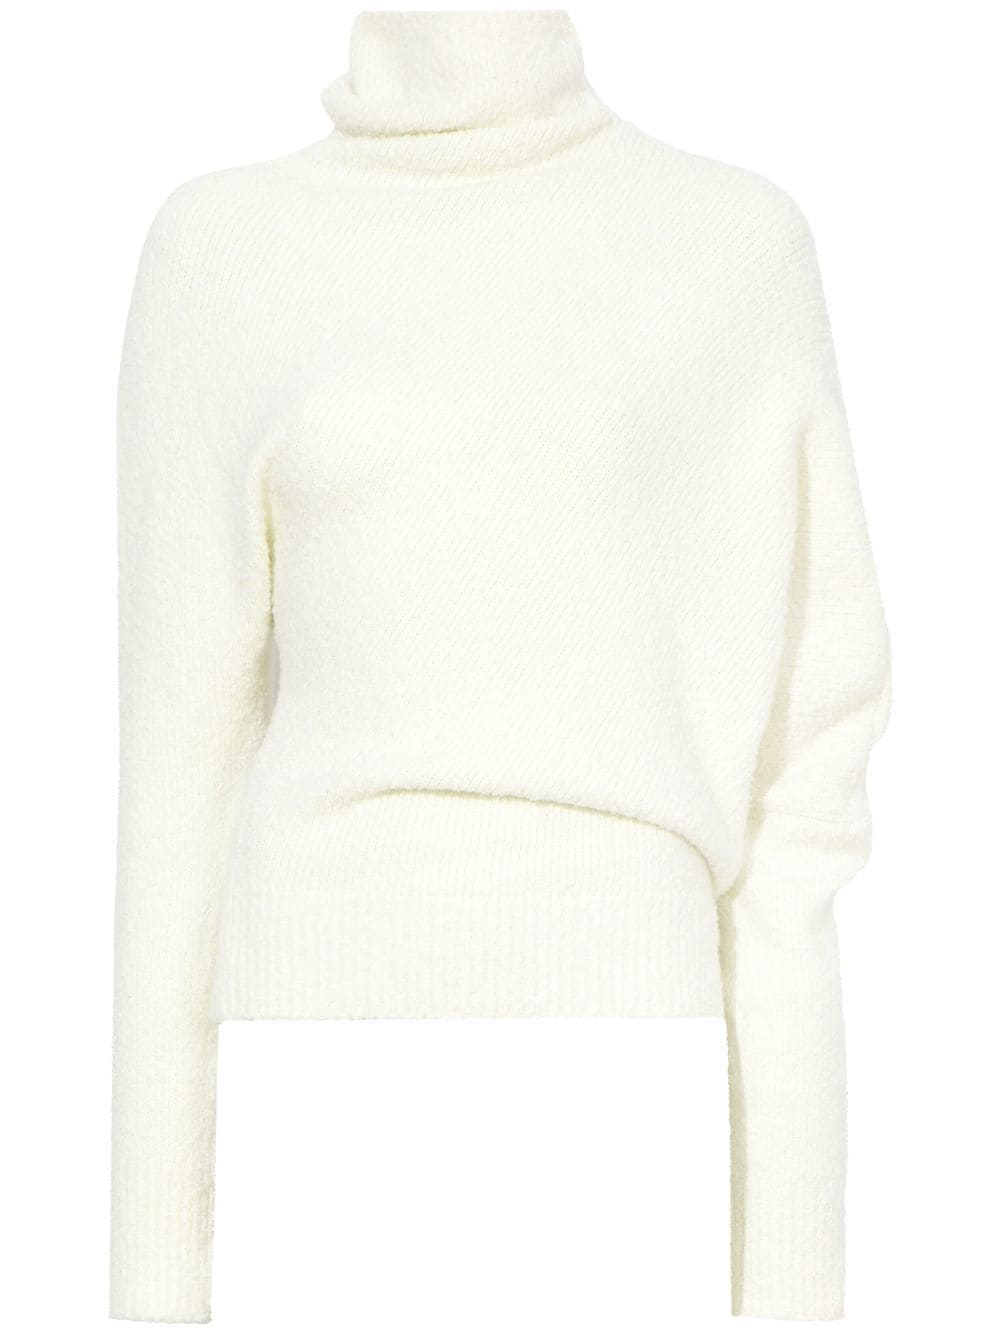 Proenza Schouler Fuzzy Boucle asymmetric sweater - White von Proenza Schouler